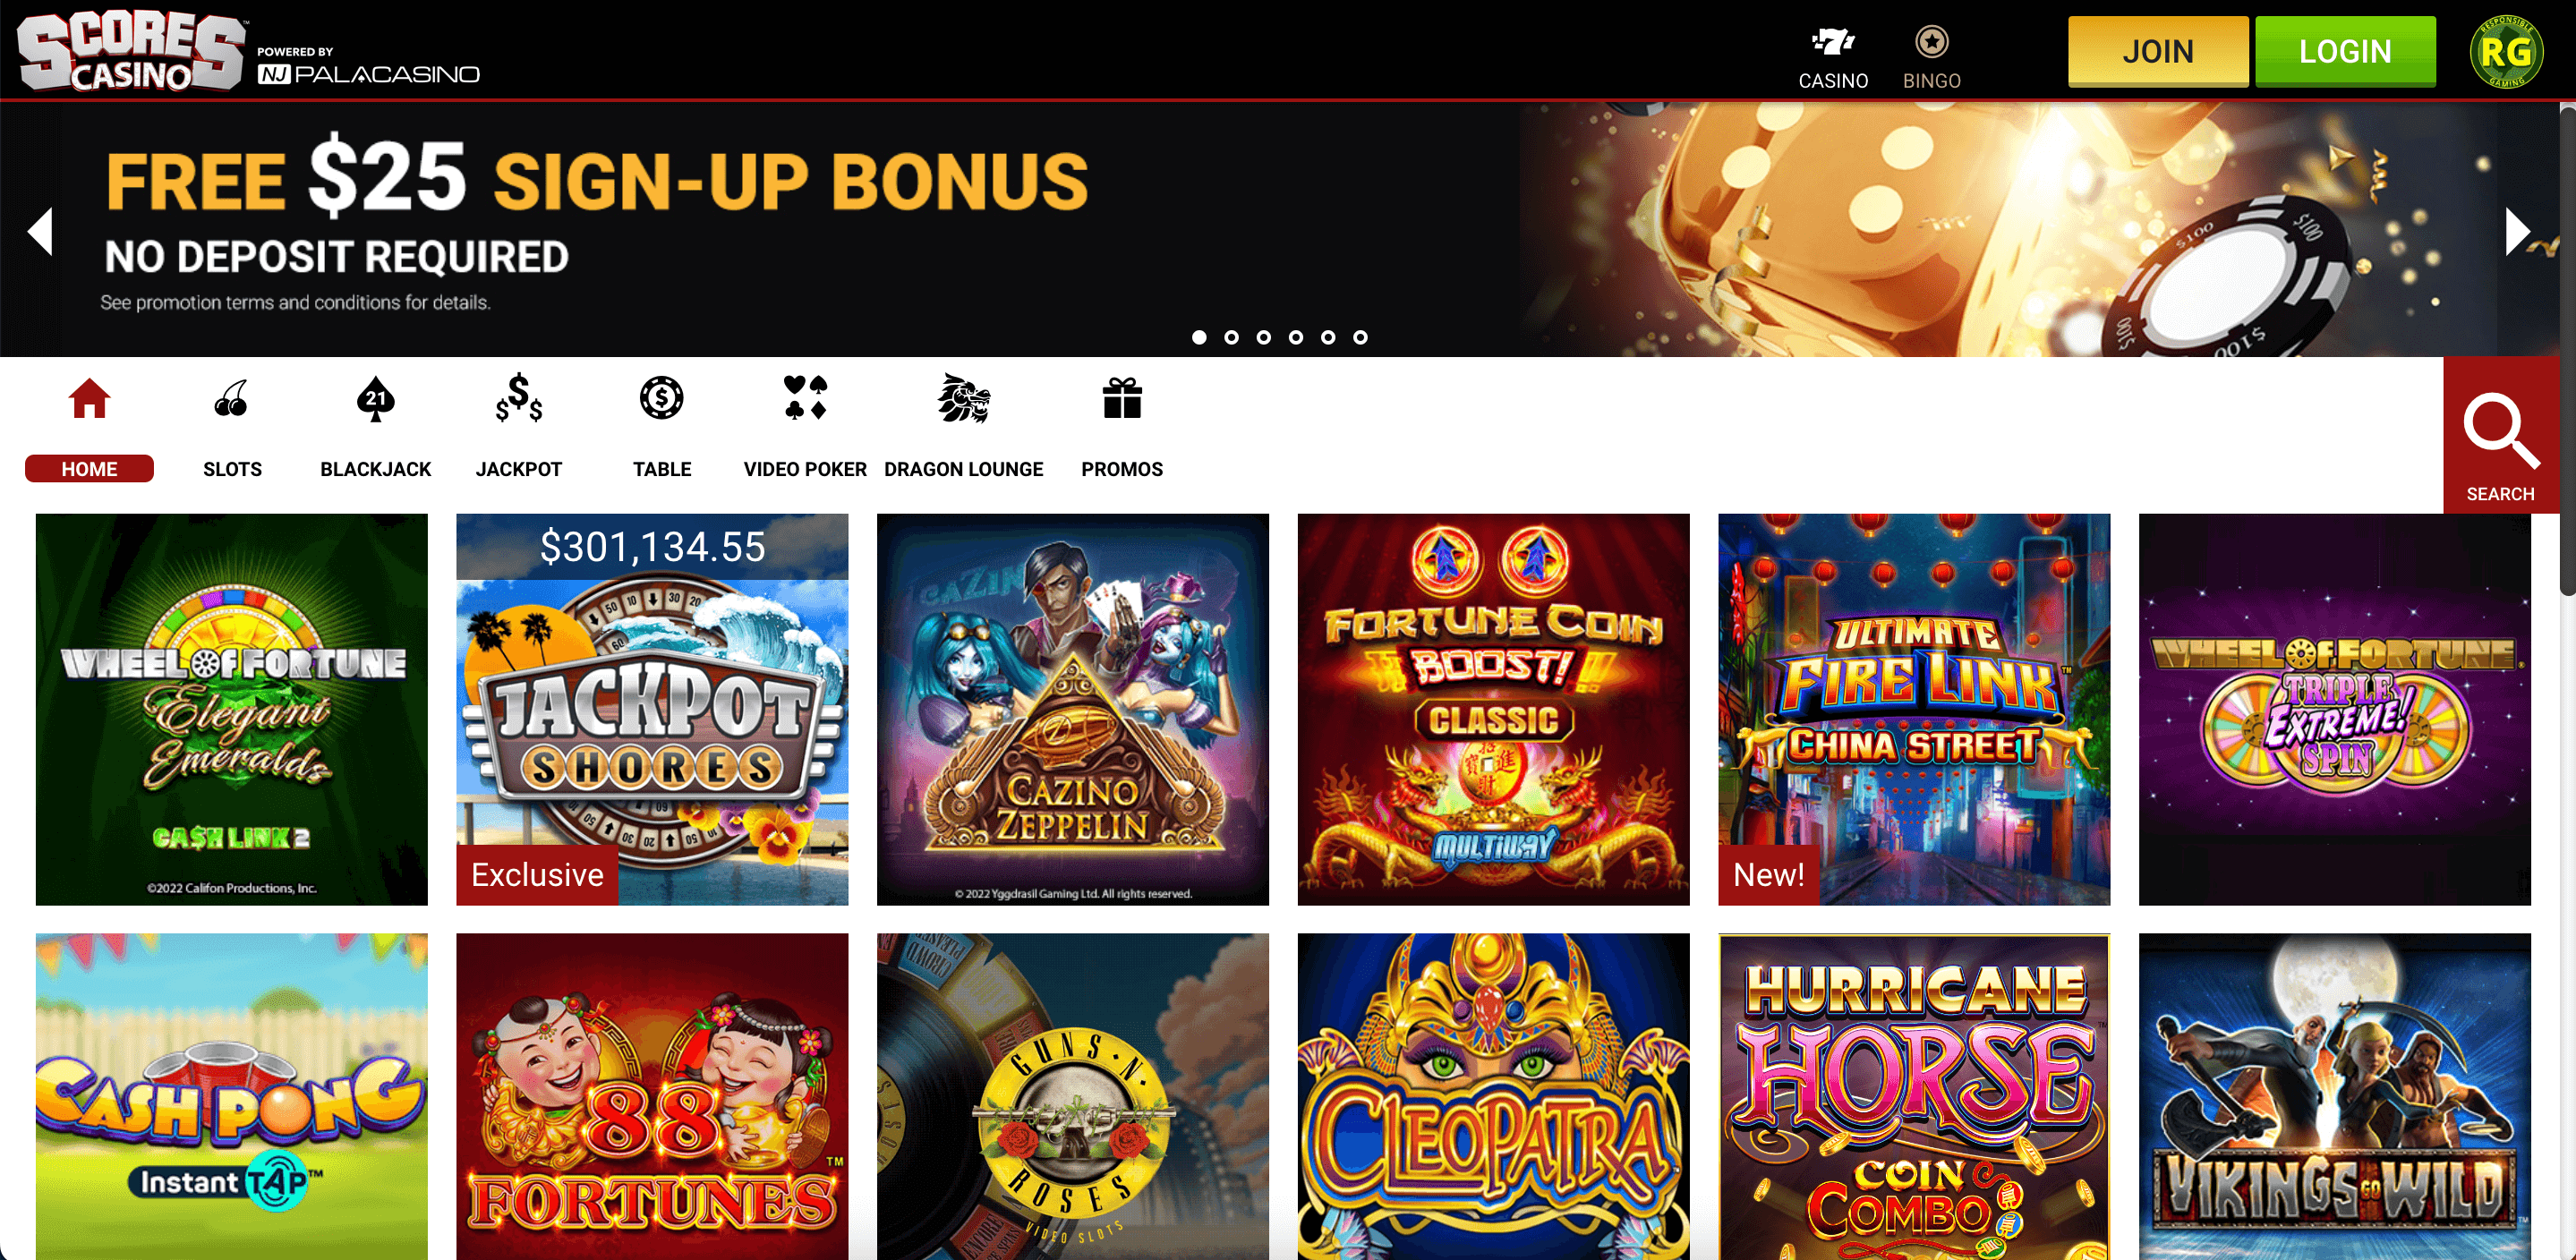 Scores Casino NJ Home Page